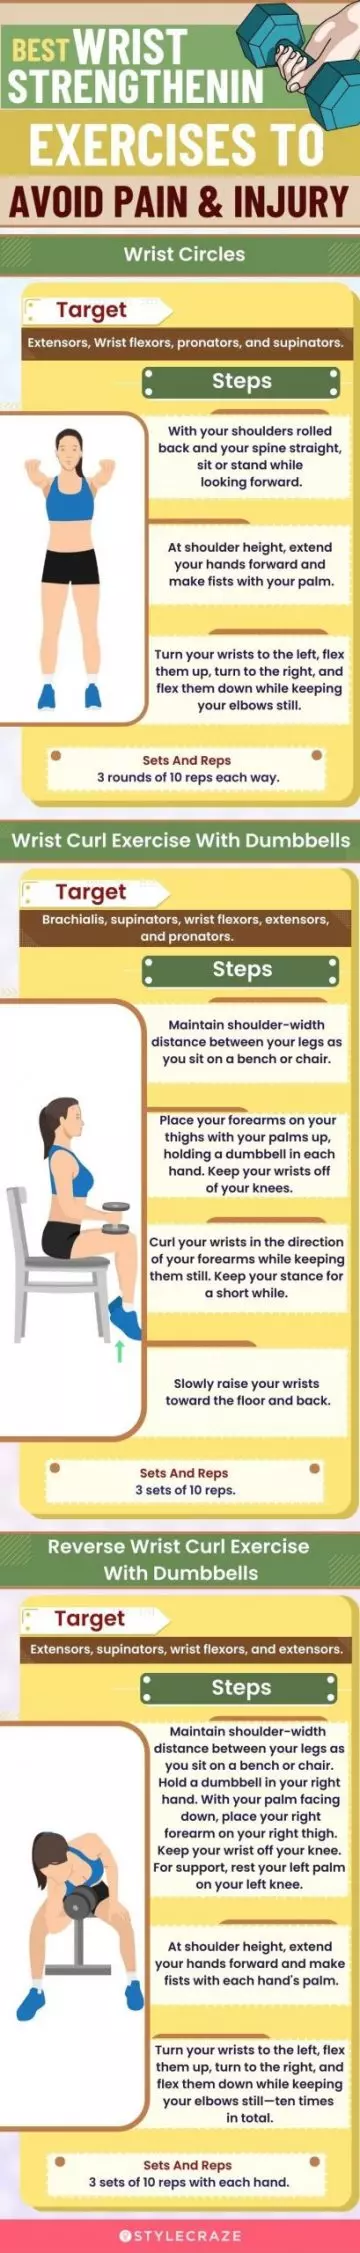 best wrist strengthnin exercise to avoid injury (infographic)